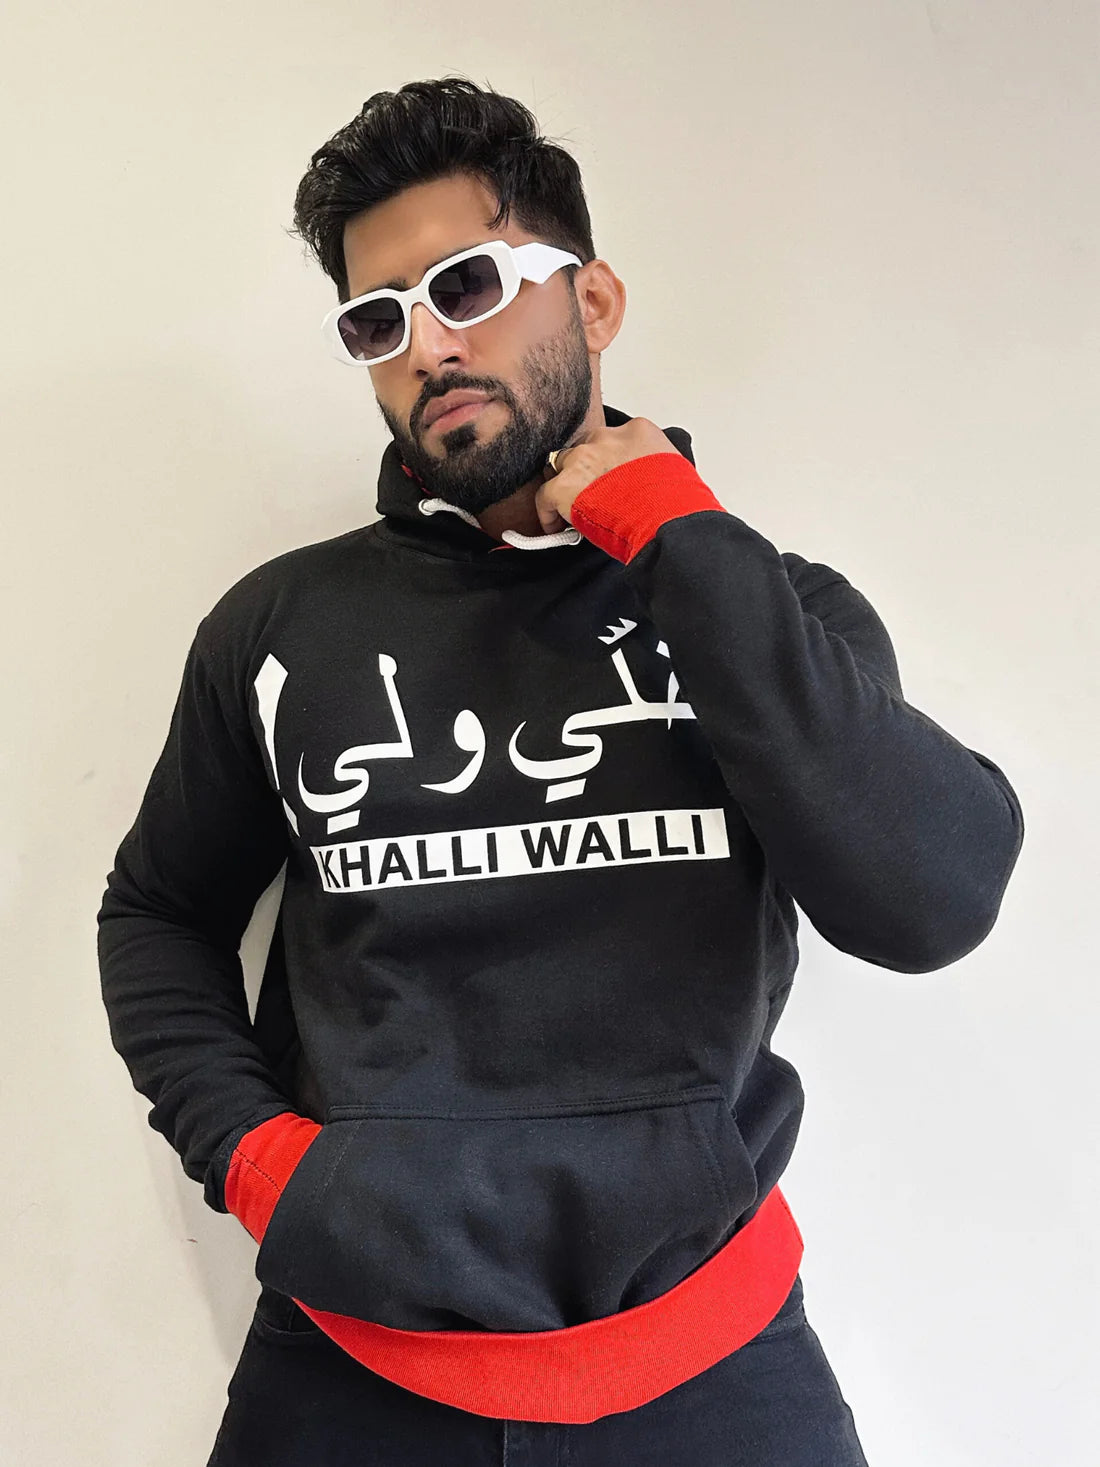 Khalli Walli - ArabianXports